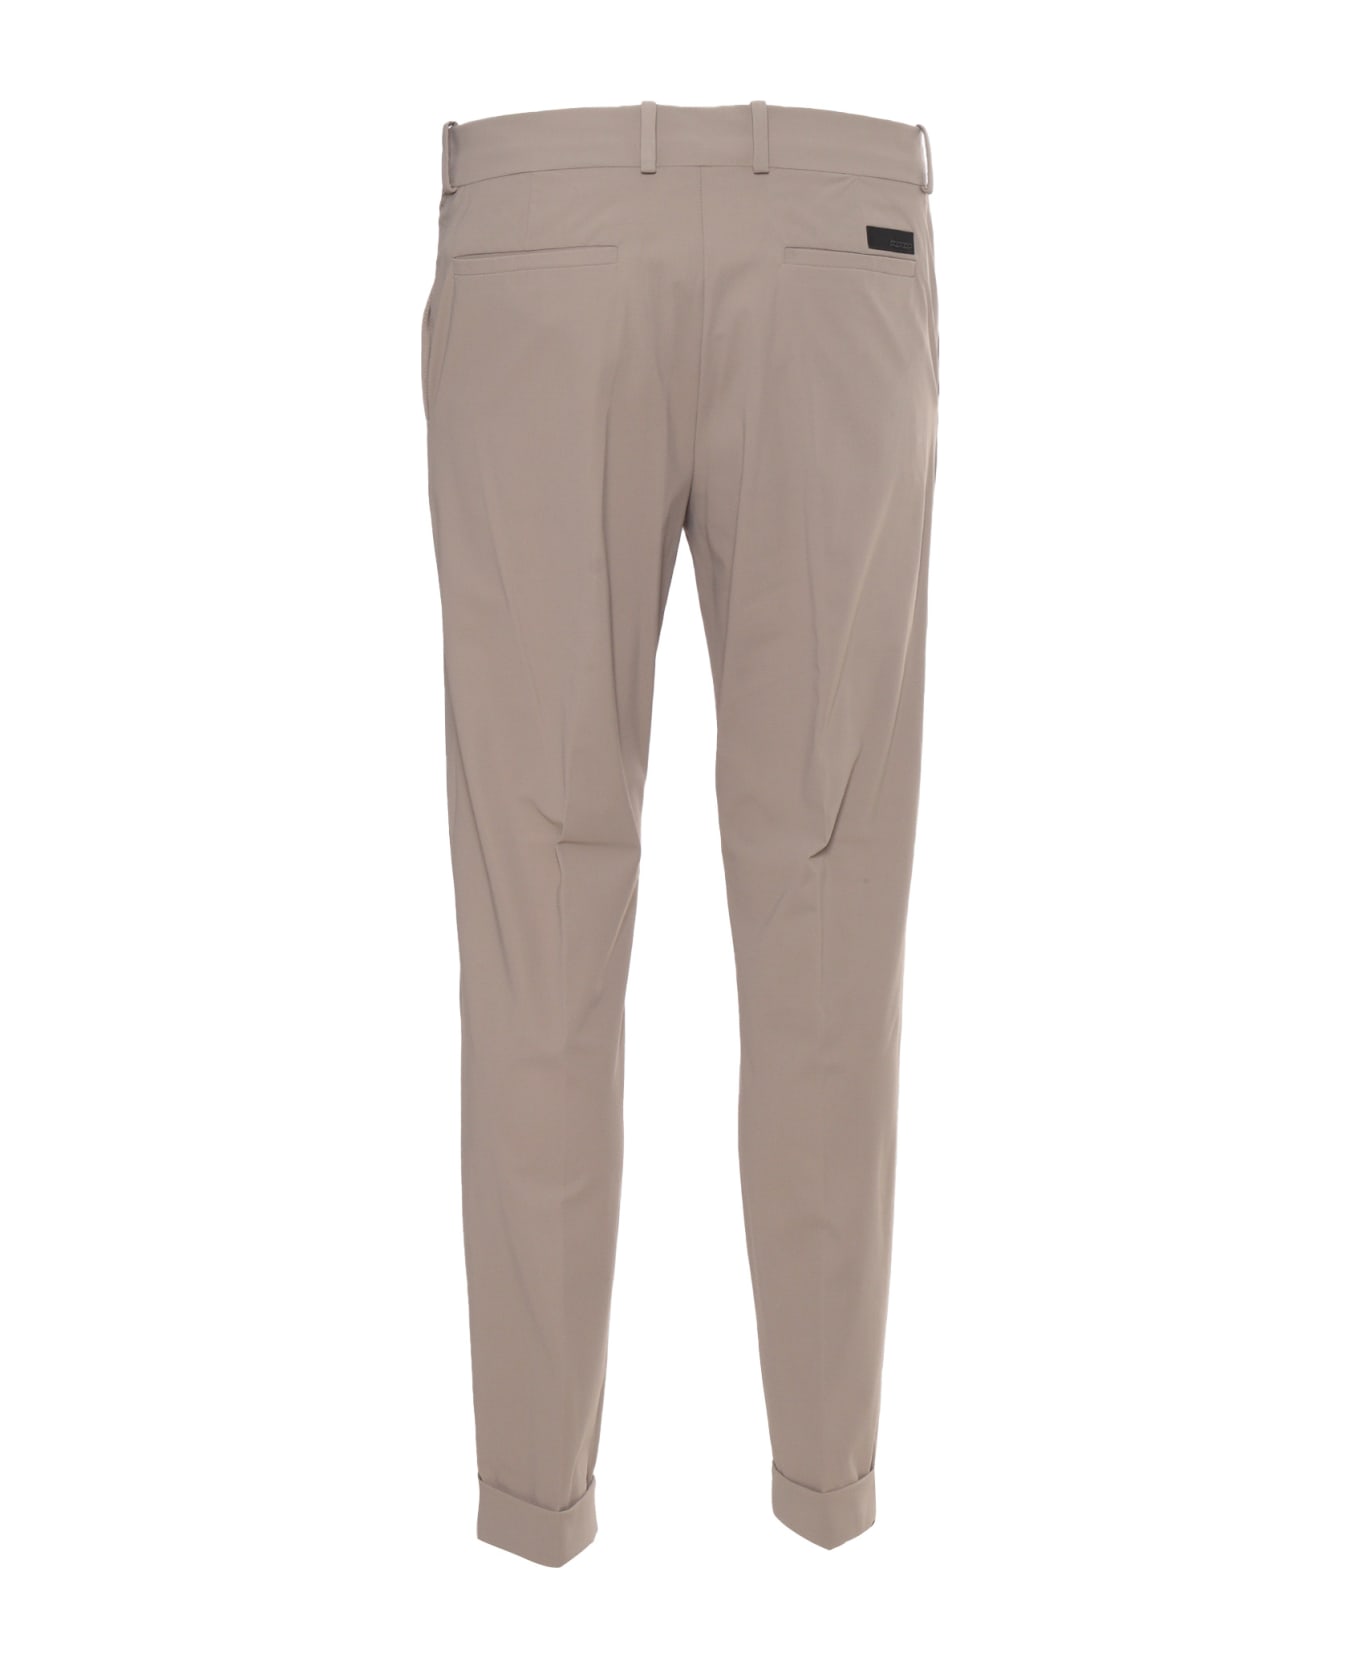 RRD - Roberto Ricci Design Beige Chino Trousers - GREY ボトムス